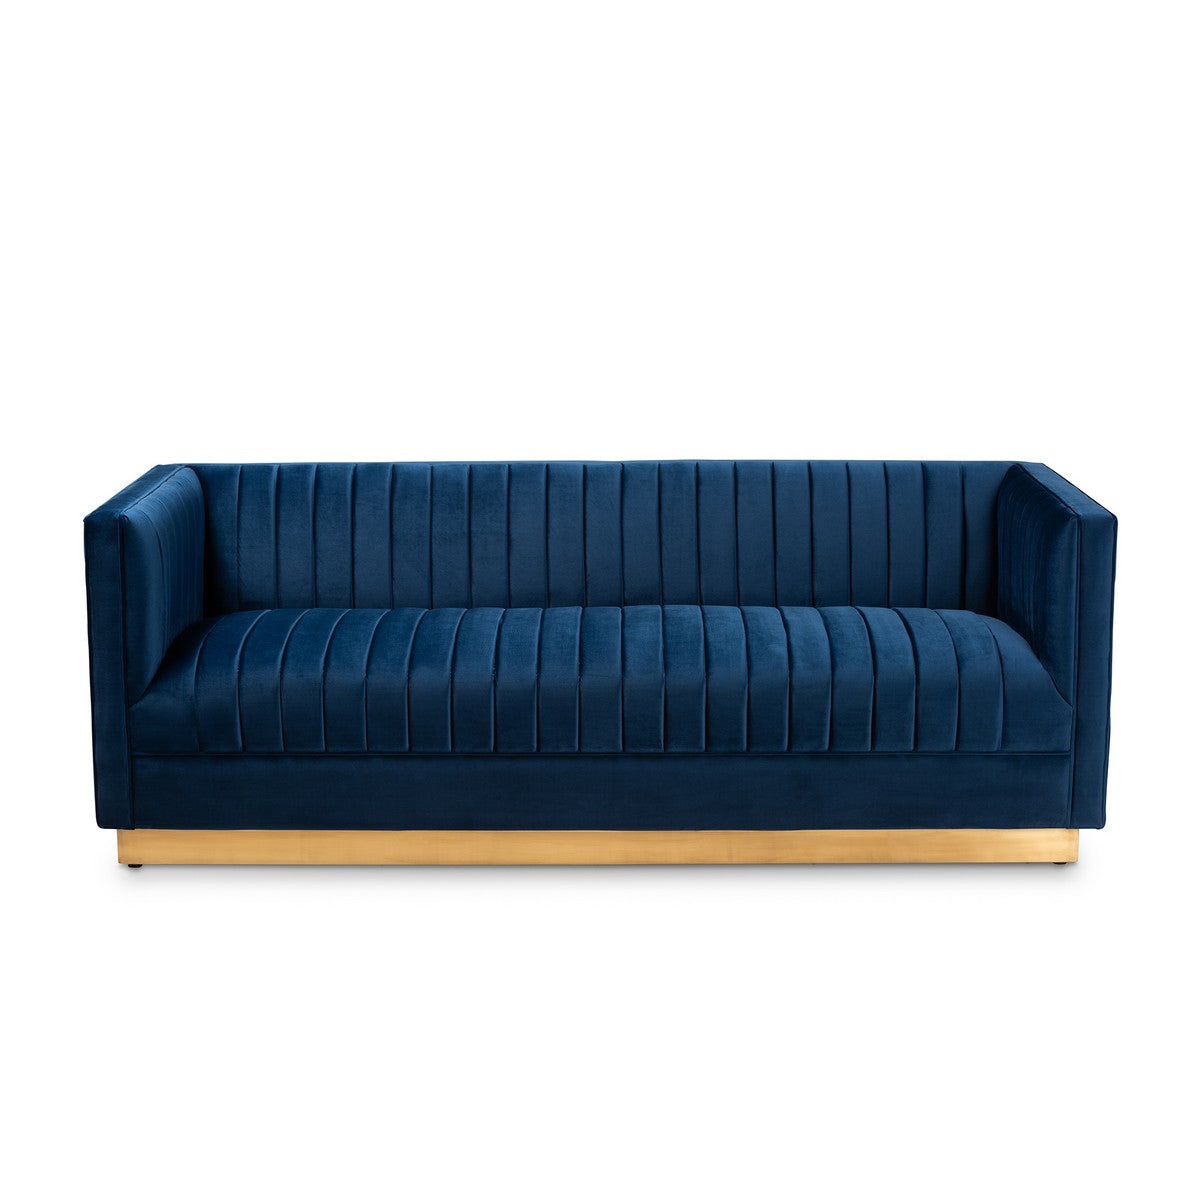 Baxton Studio Aveline Glam and Luxe Navy Blue Velvet Fabric Upholstered Brushed Gold Finished Sofa